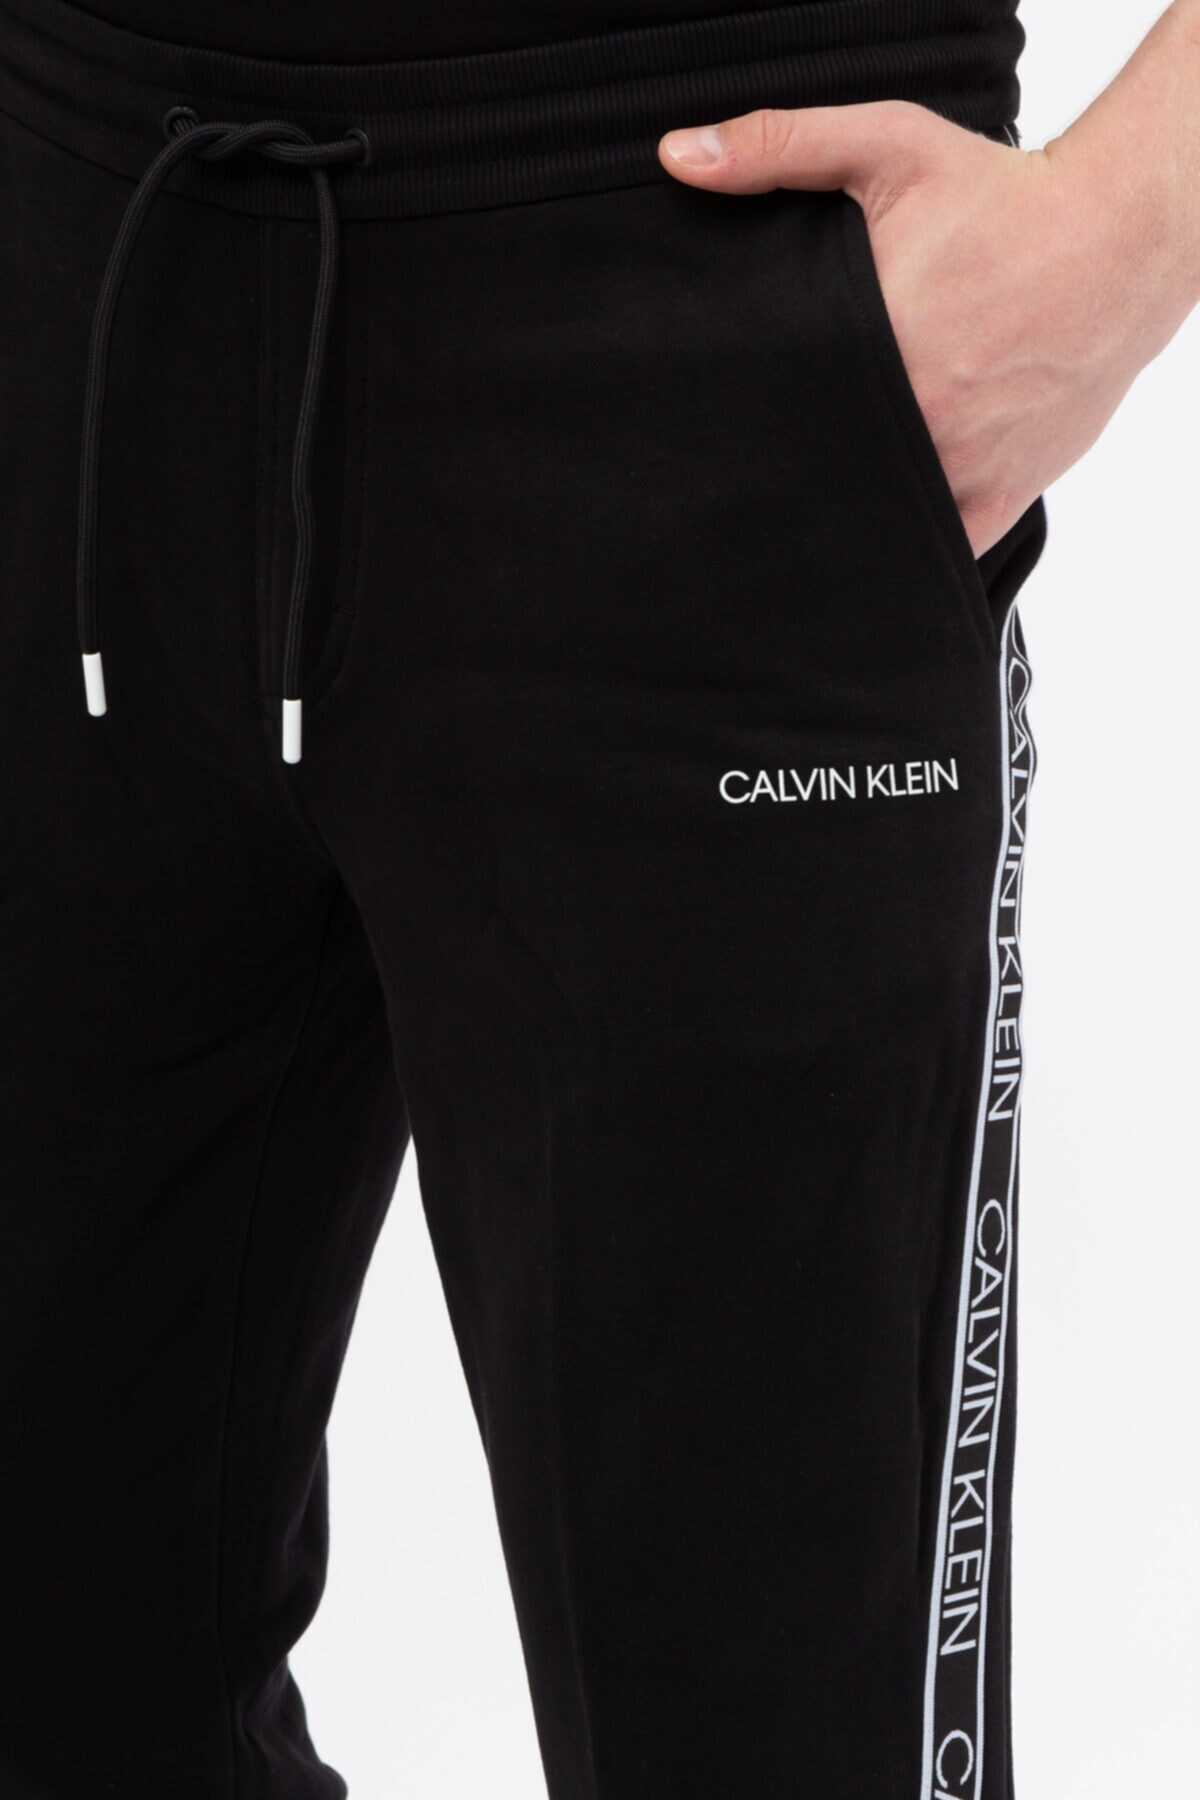 شلوار گرمکن اسپرت مردانه بند دار مشکی برند Calvin Klein